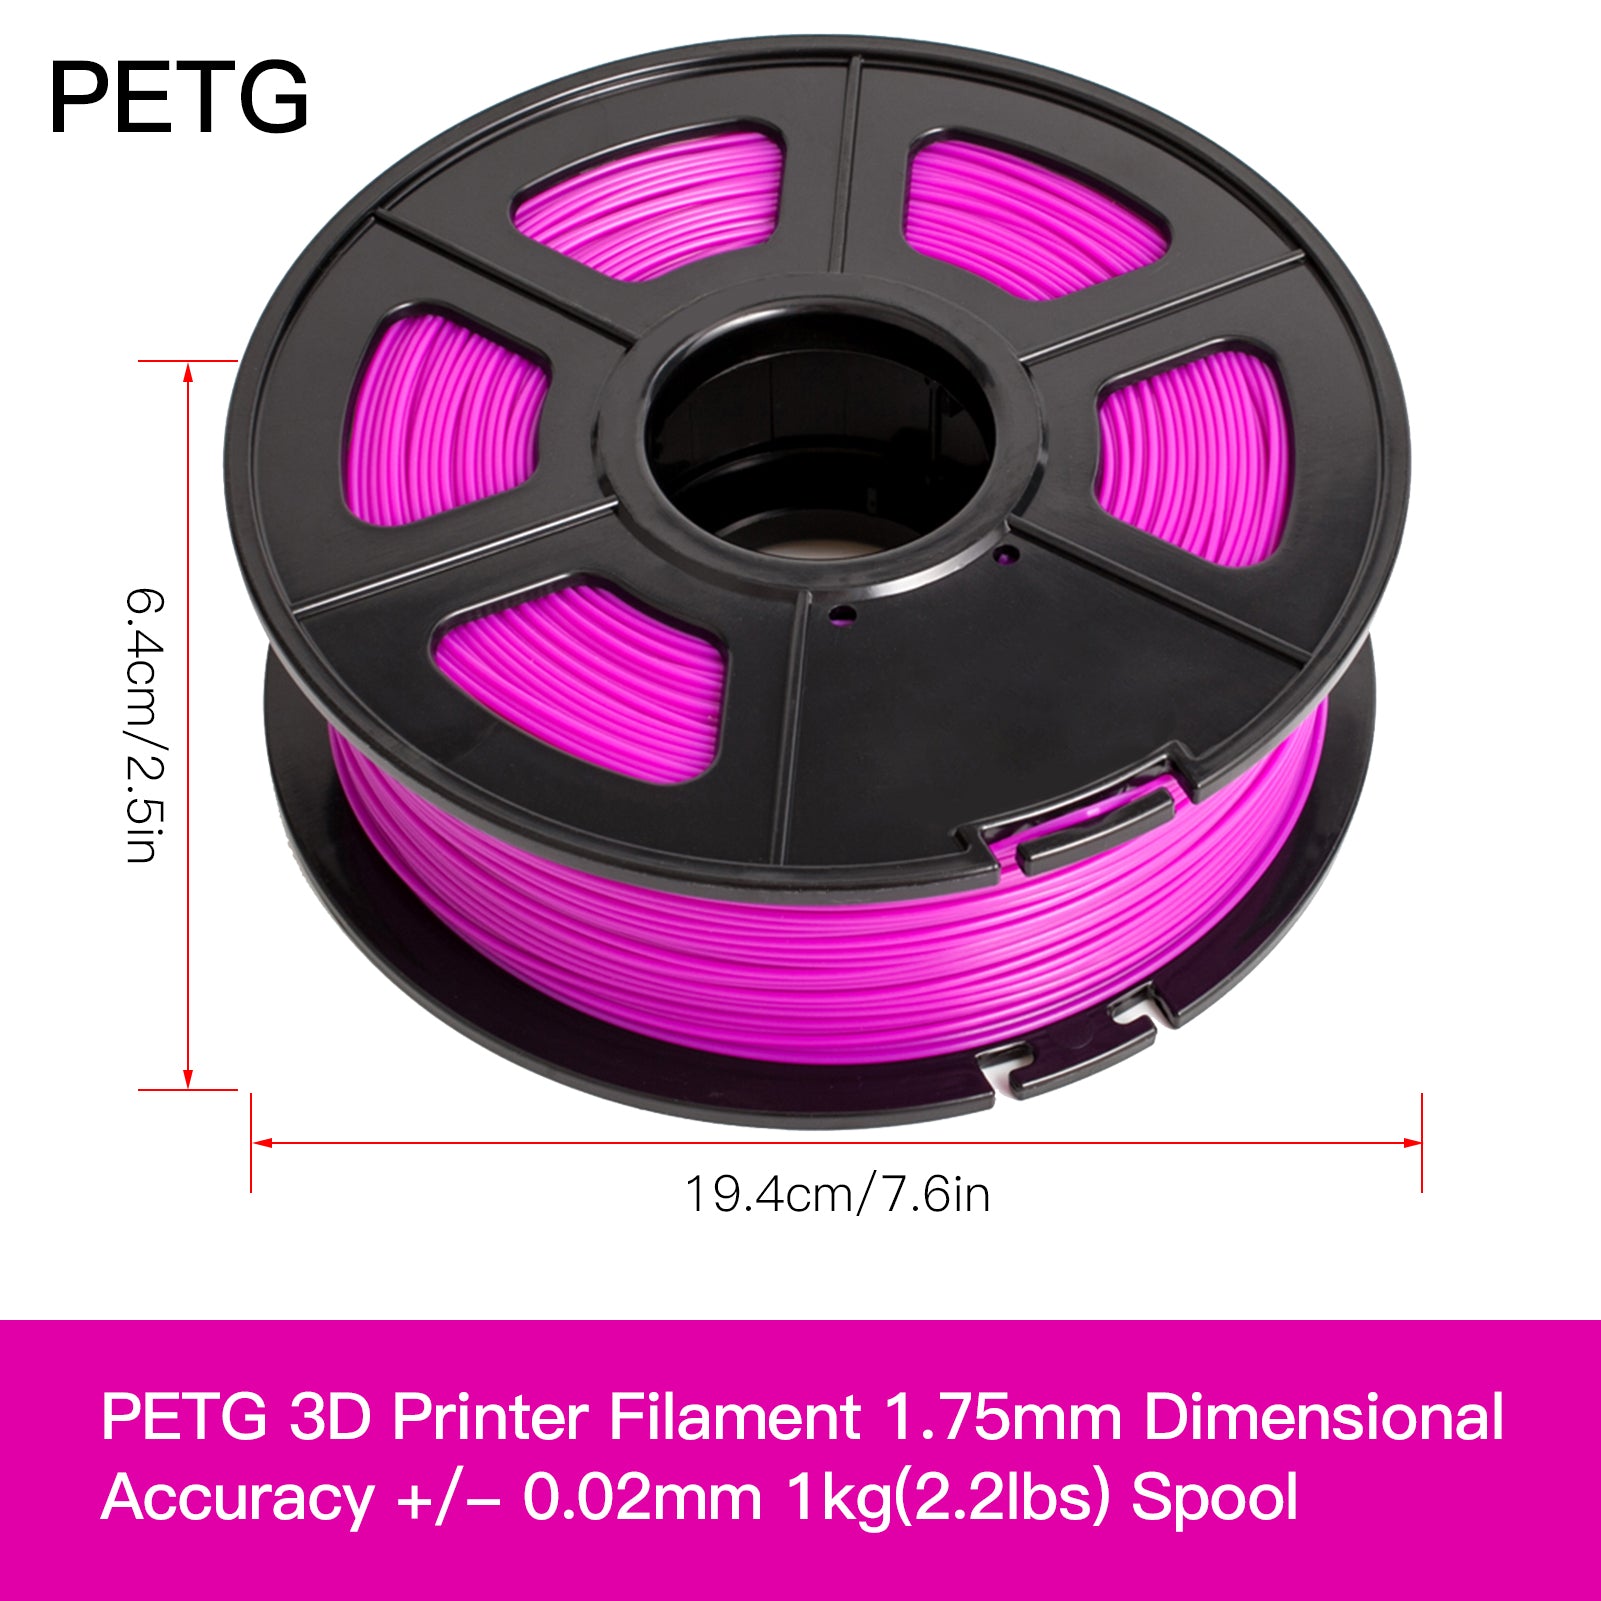 1kg Spool SUNLU PETG Filament 1.75mm diameter printing consumables suitable for most FDM 3D printers Pink